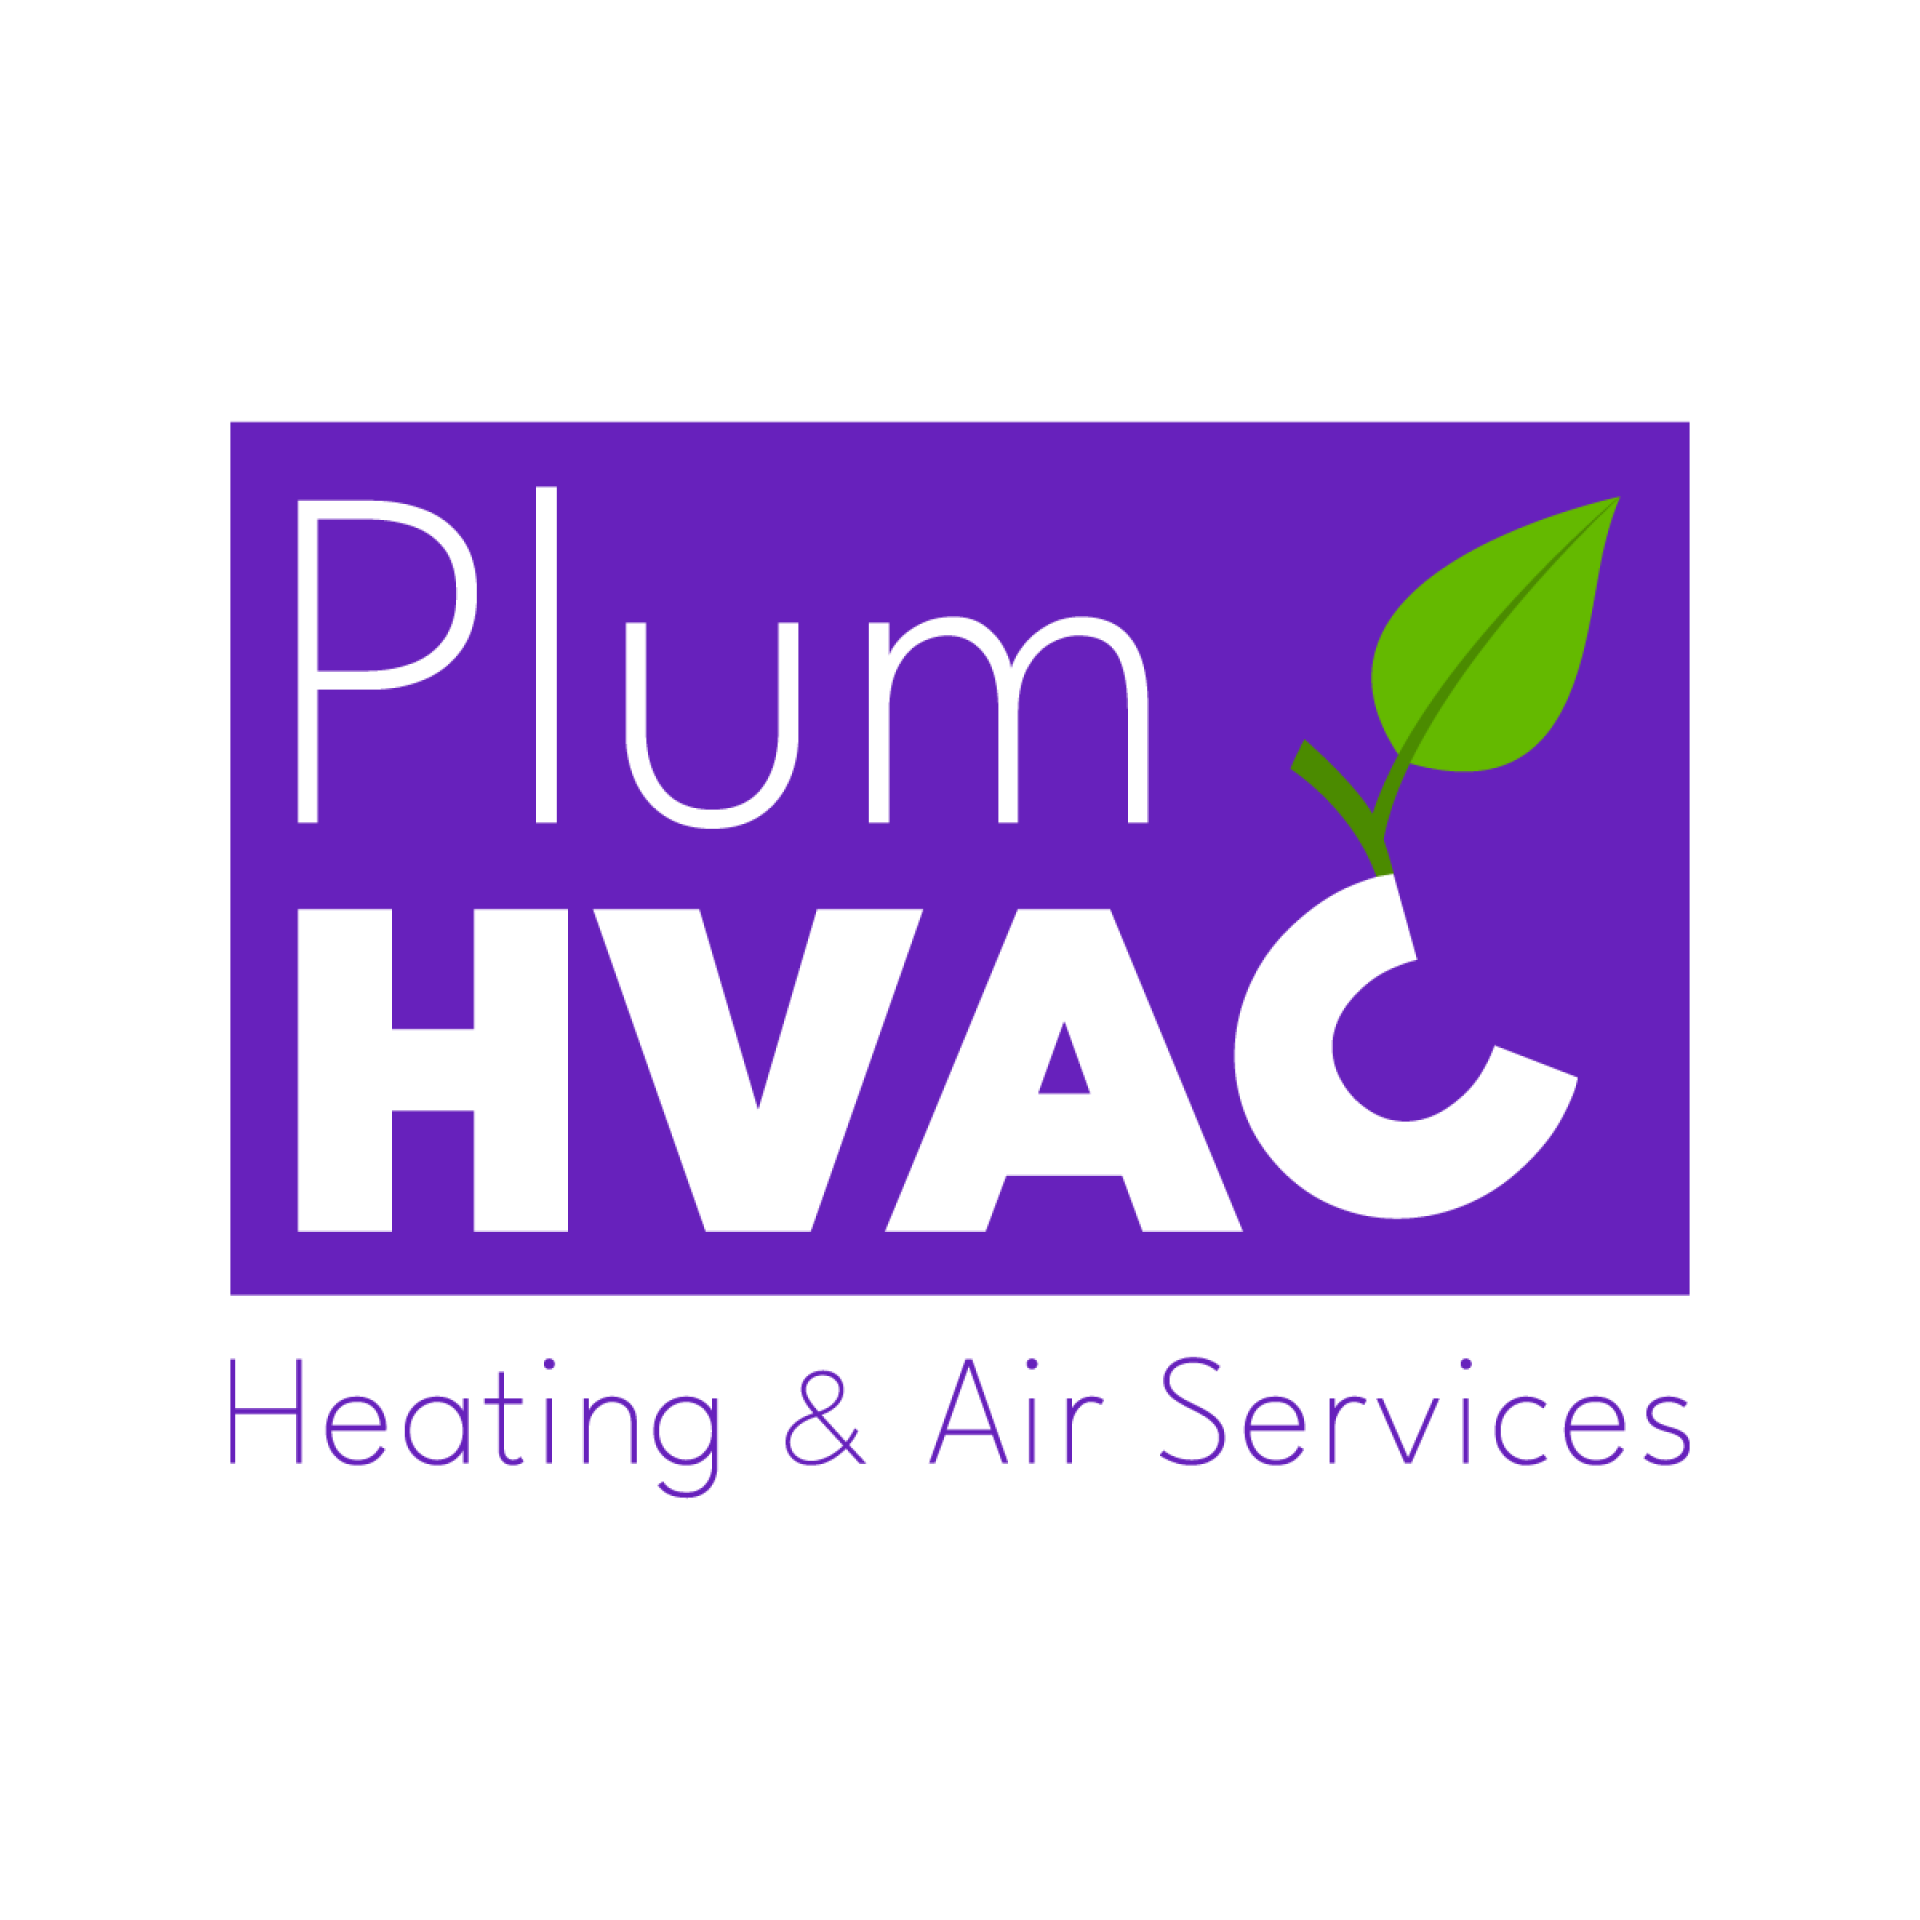 Plum HVAC company logo